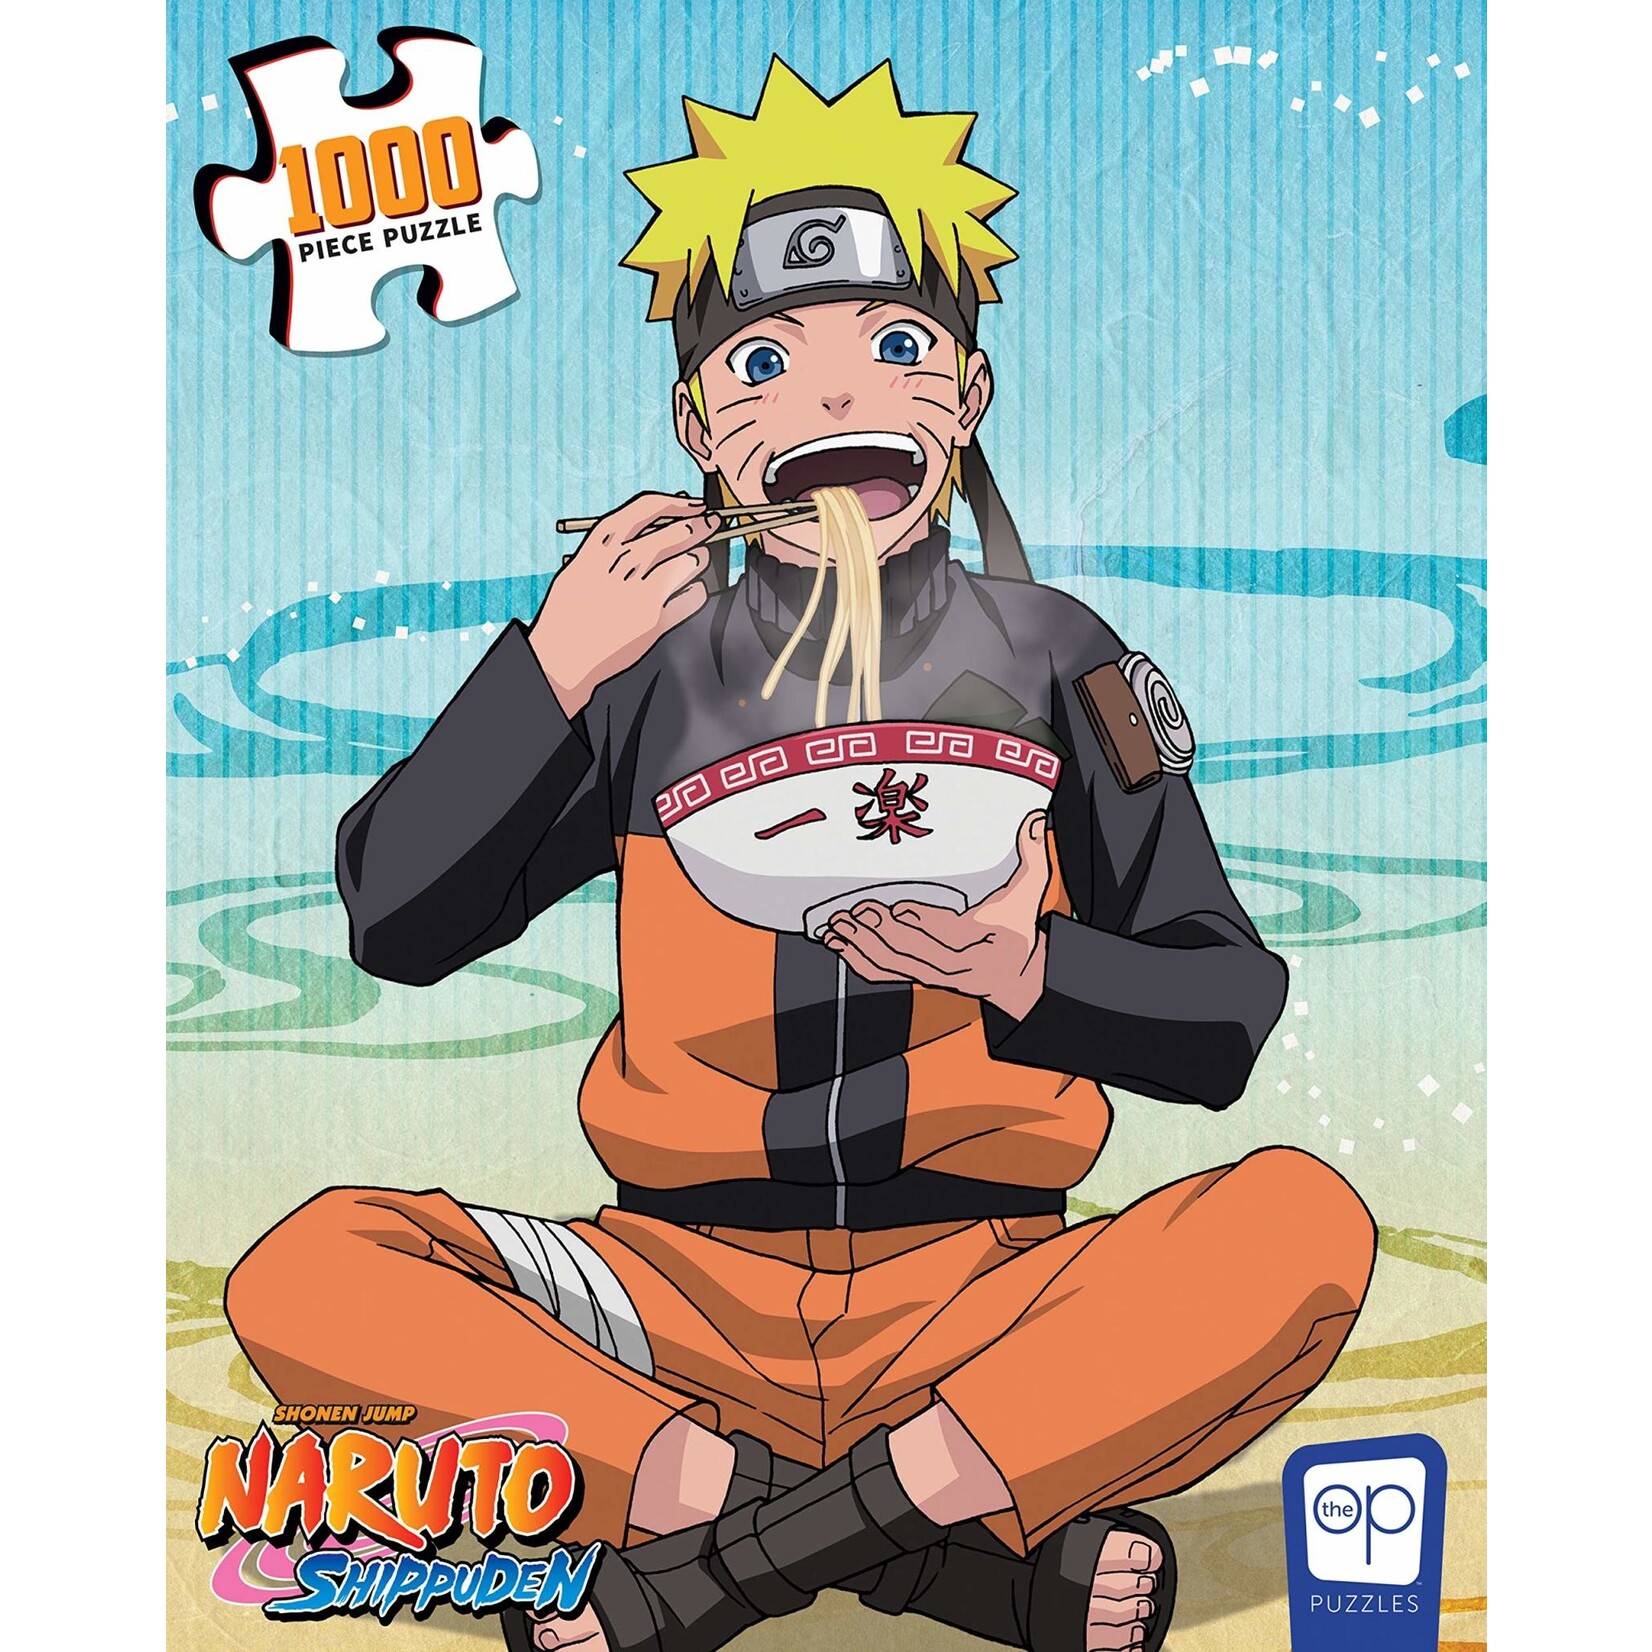 Naruto Naruto Shippuden 1000 Pieces Puzzle